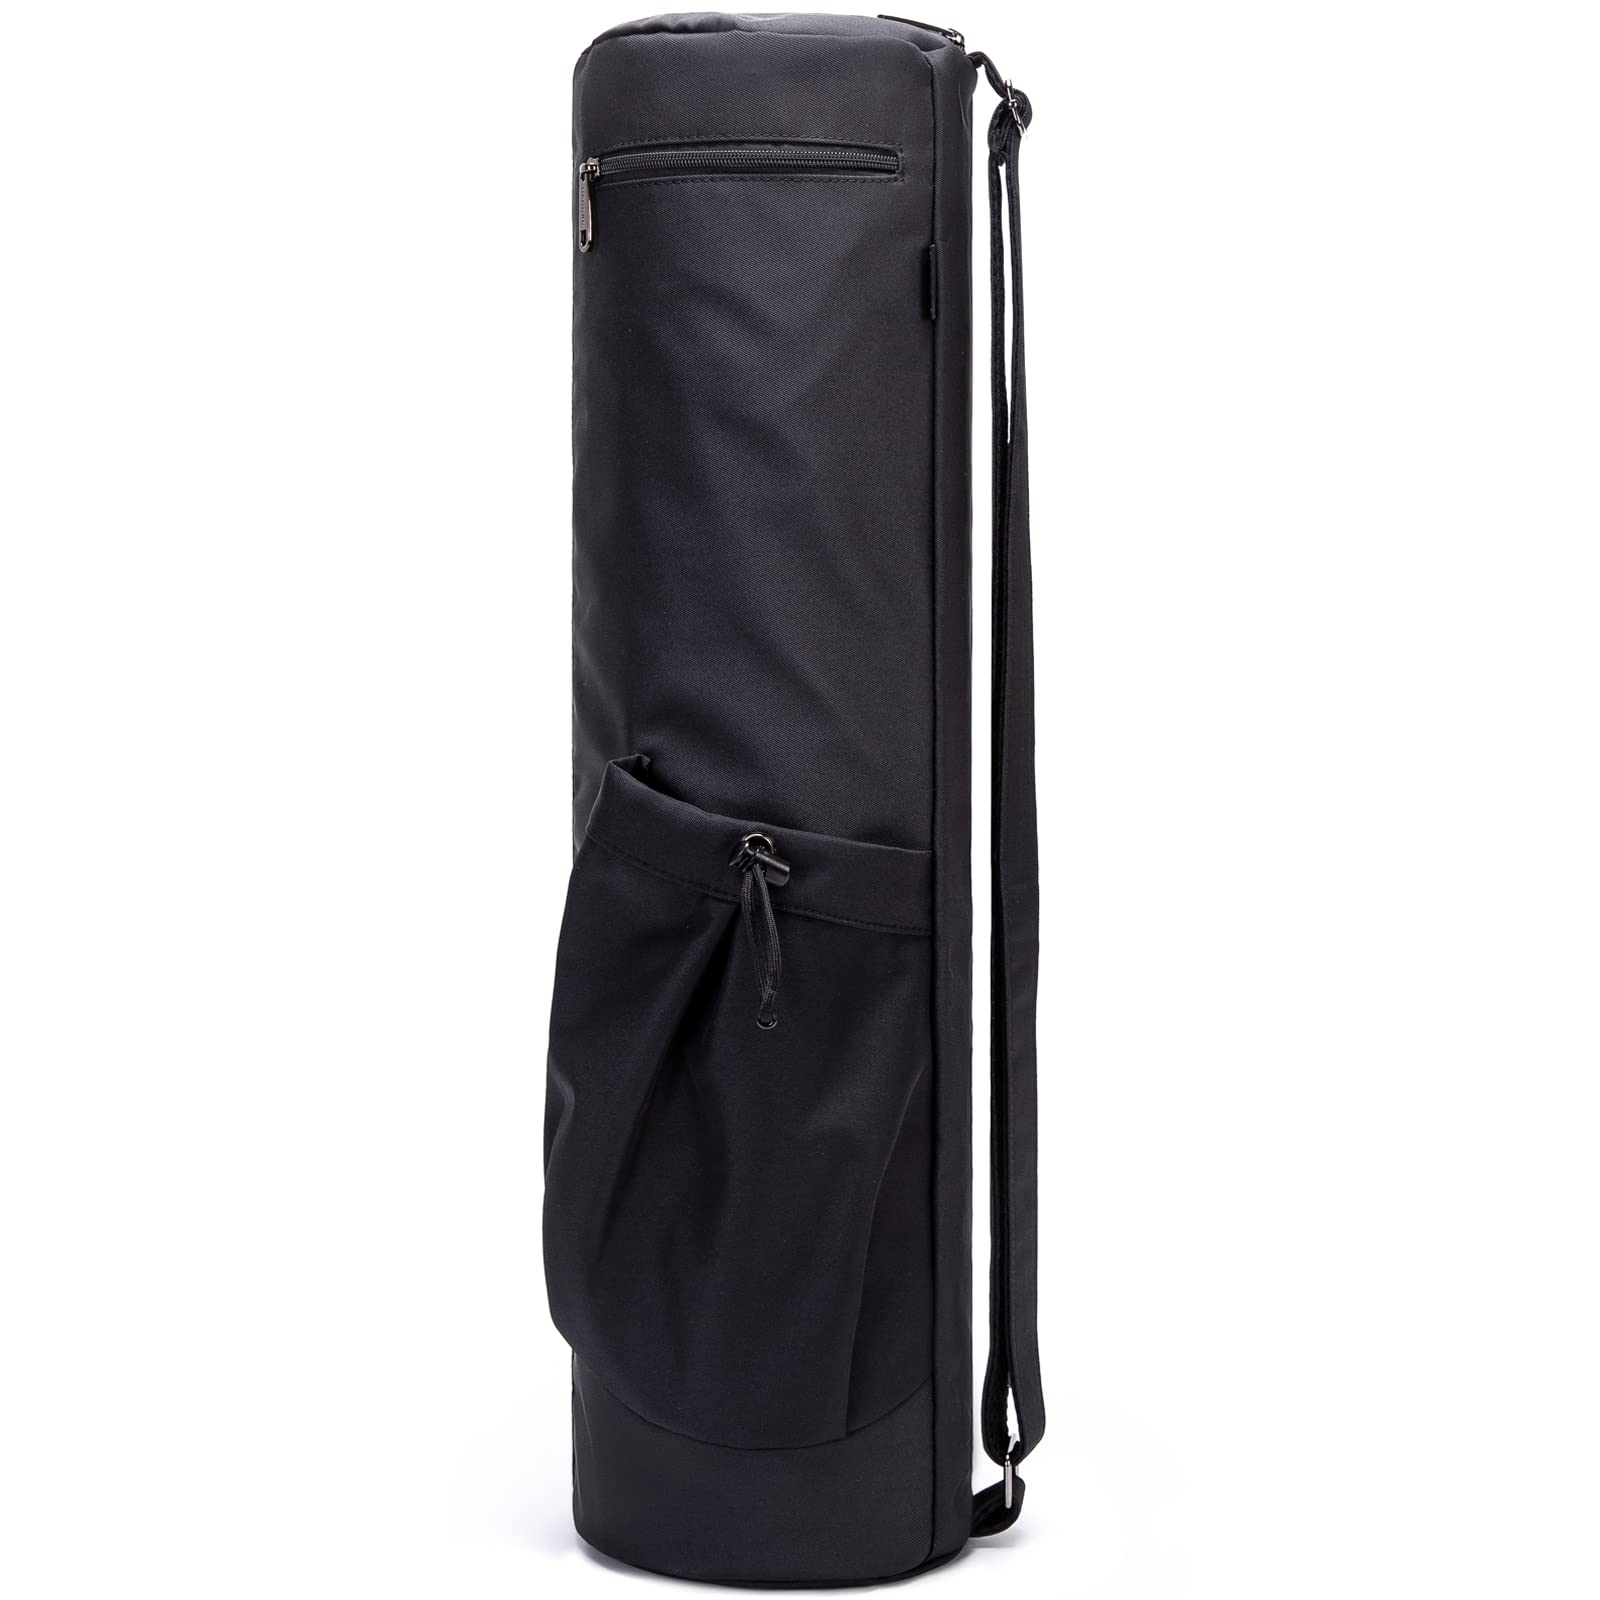  Yoga Bag Yoga Mat Bags For Women Yoga Mat Bag Gym